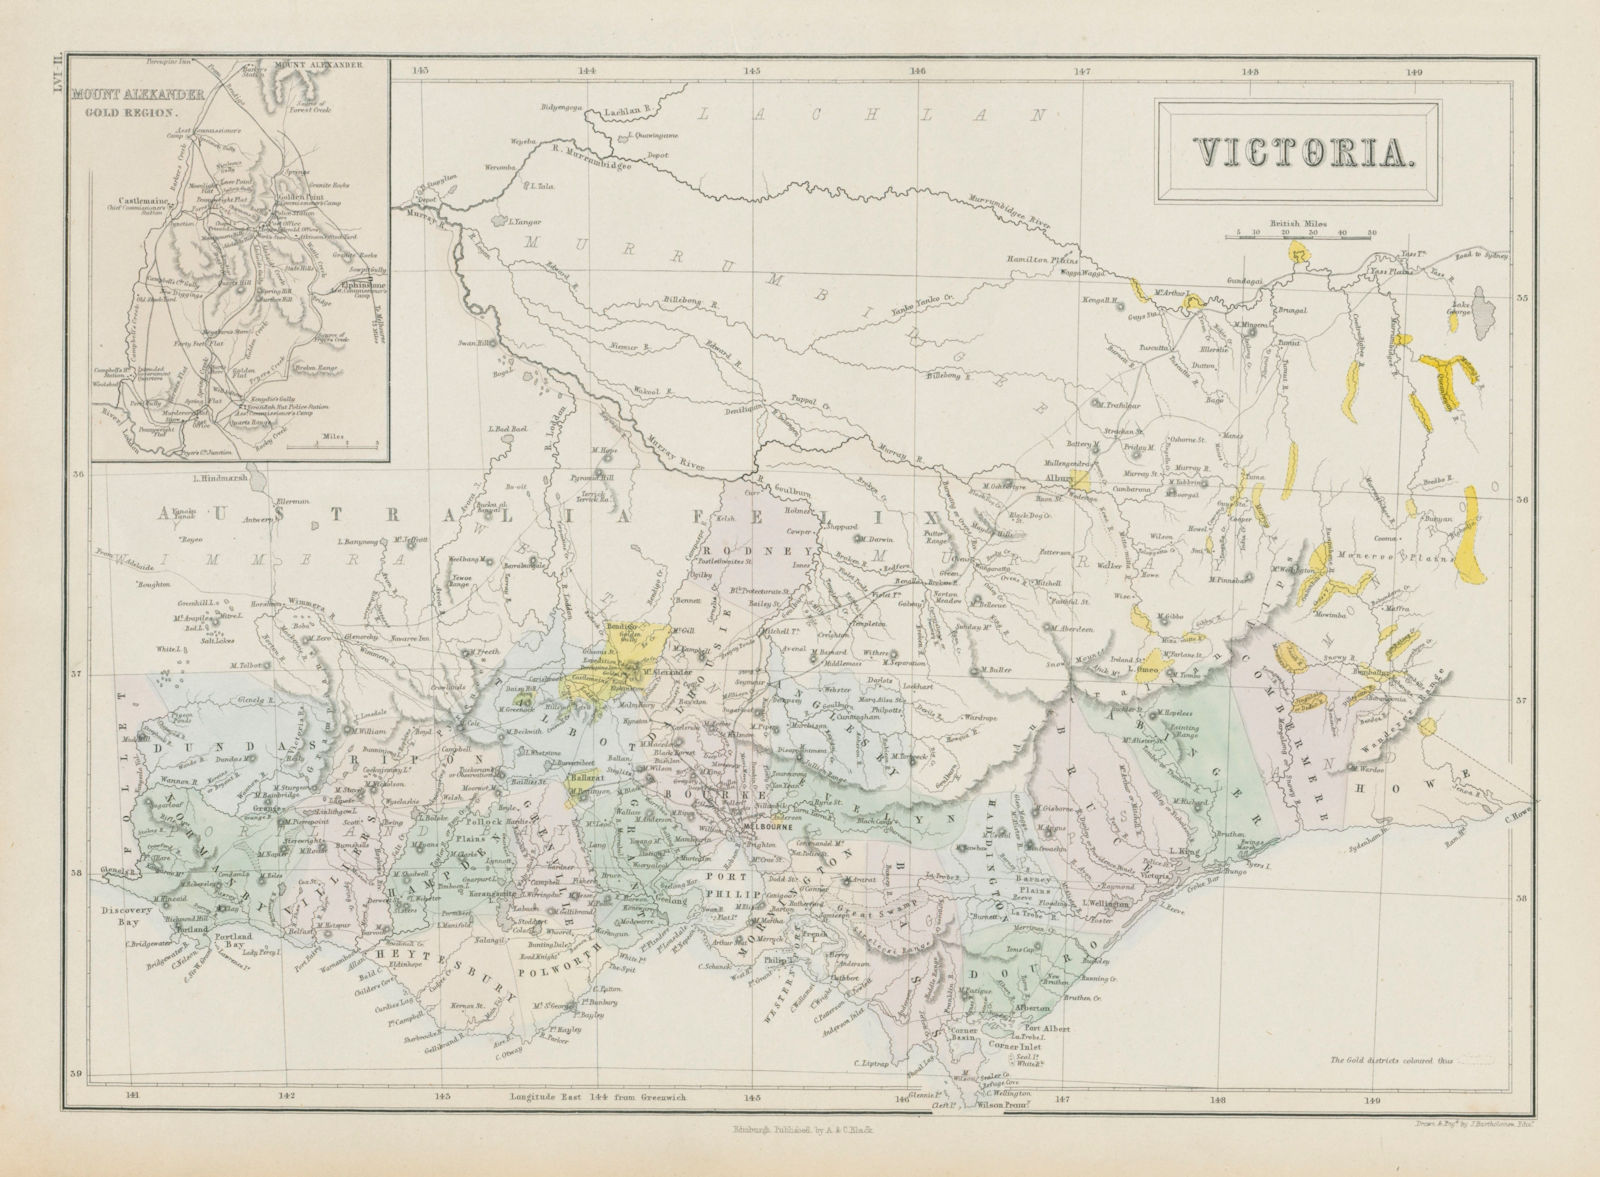 Associate Product Victoria, Australia. Gold rush districts & Mount Alexander gold region 1856 map